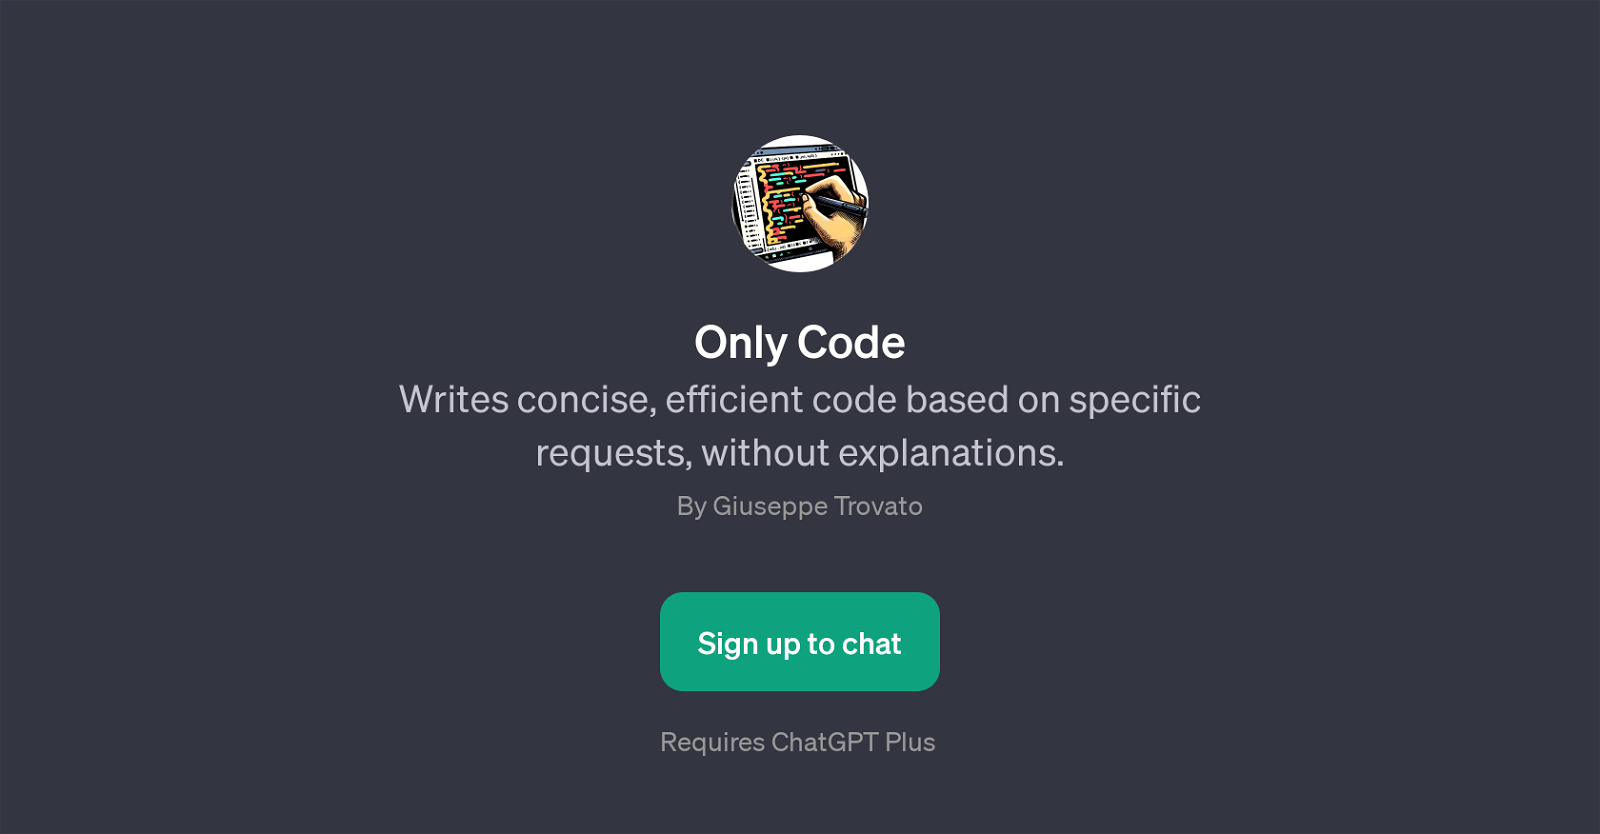 Only Code website